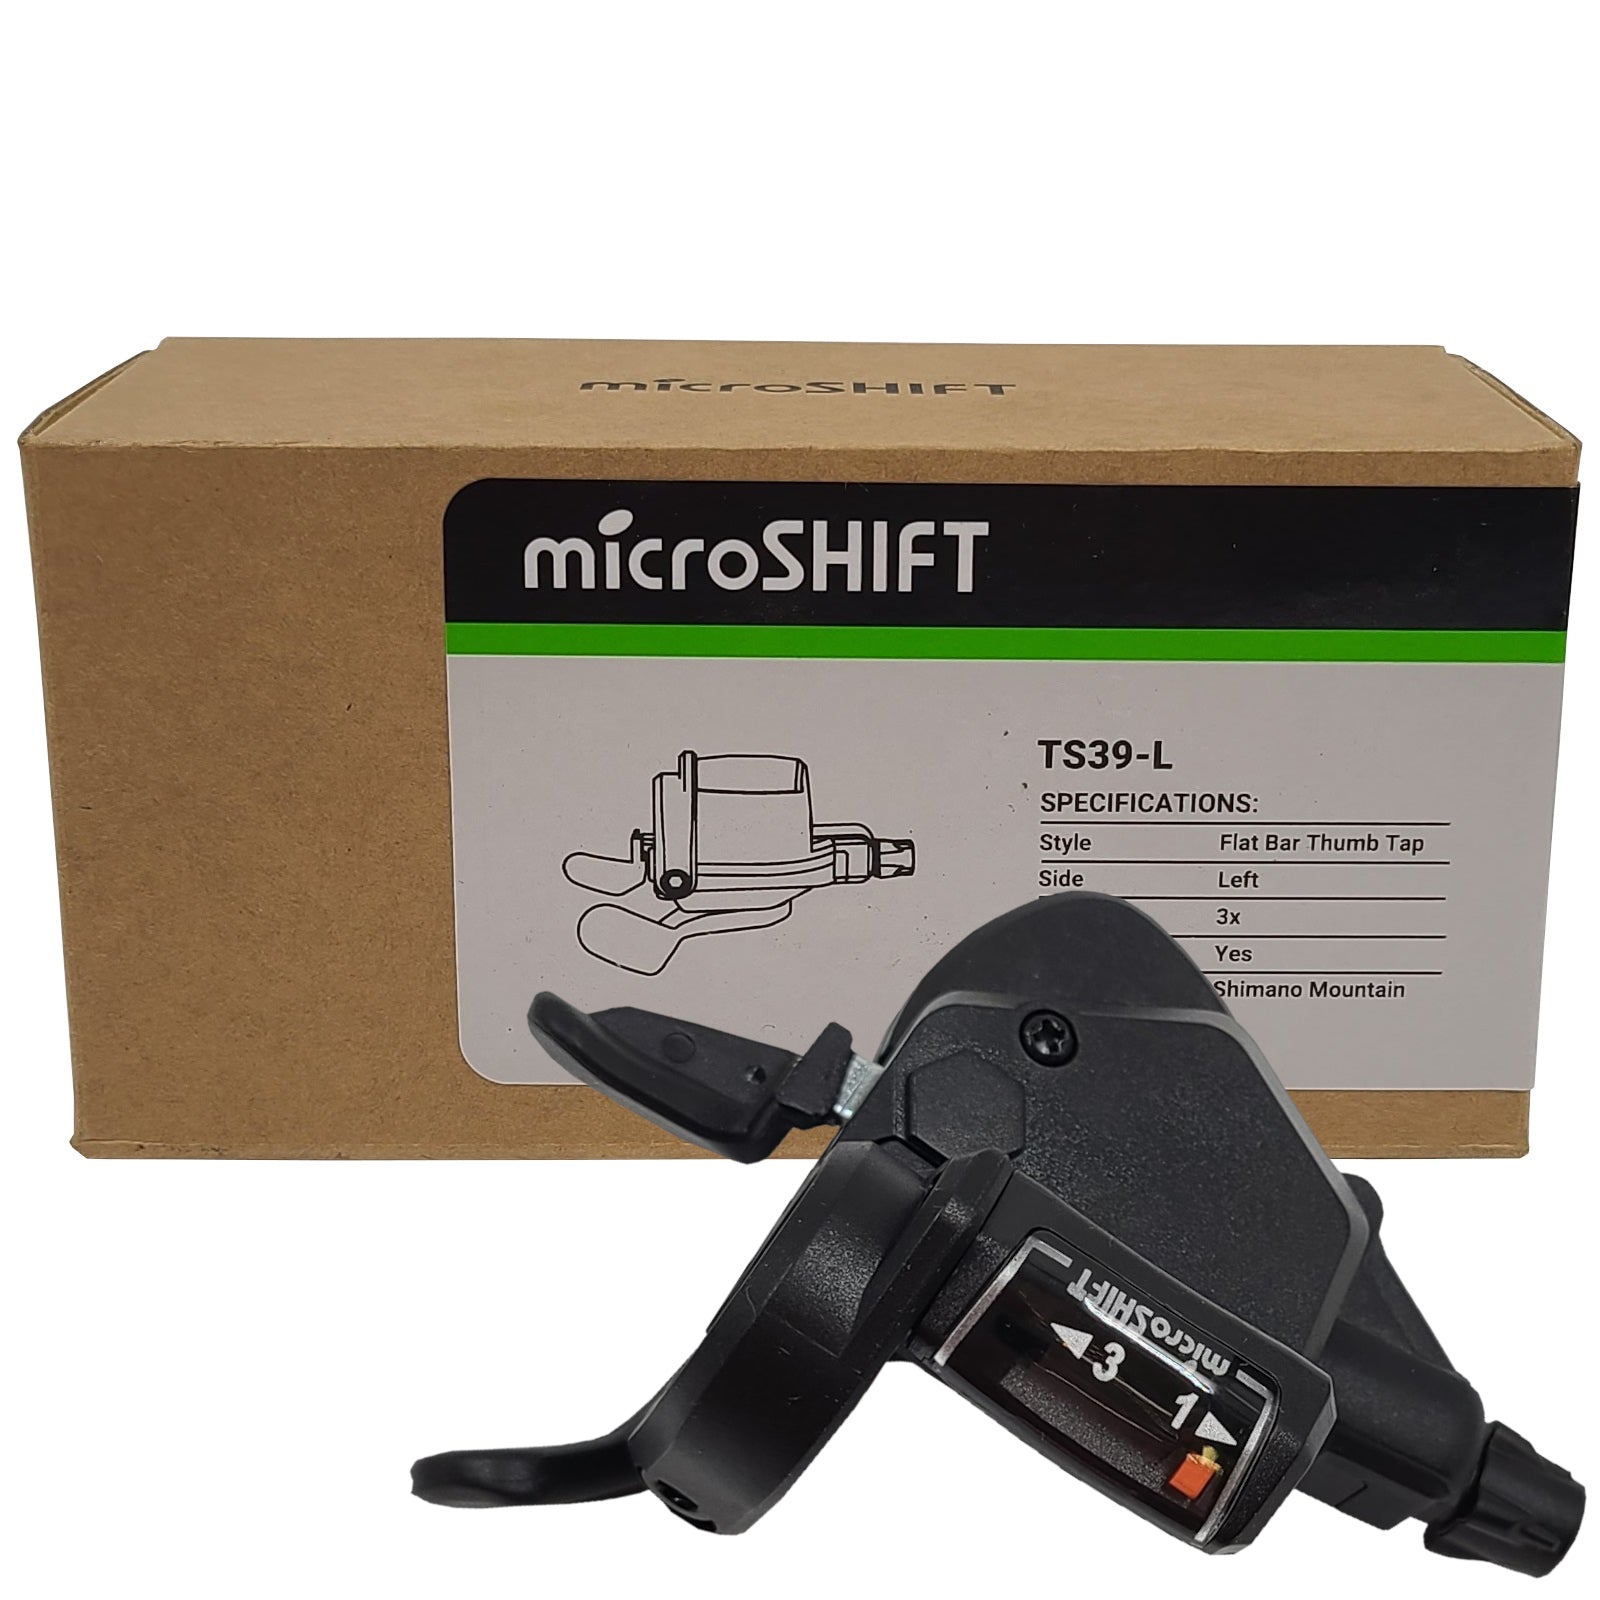 MicroSHIFT TS39-L 3 Speed Left Thumb-Tap Shifter - The Bikesmiths